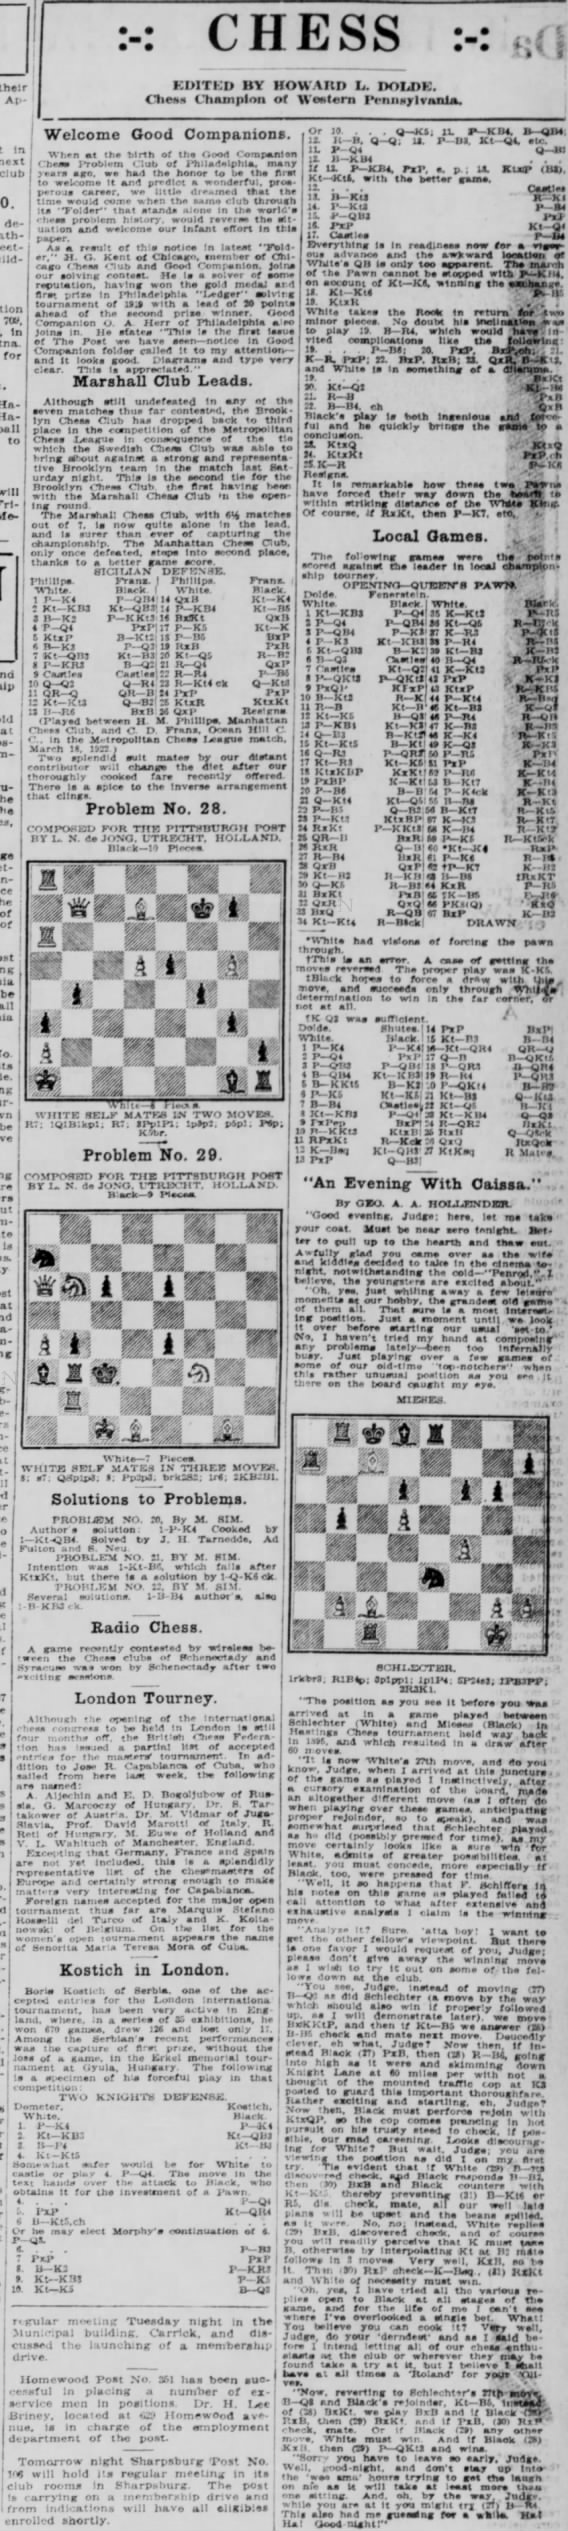 Chess by Howard L. Dolde